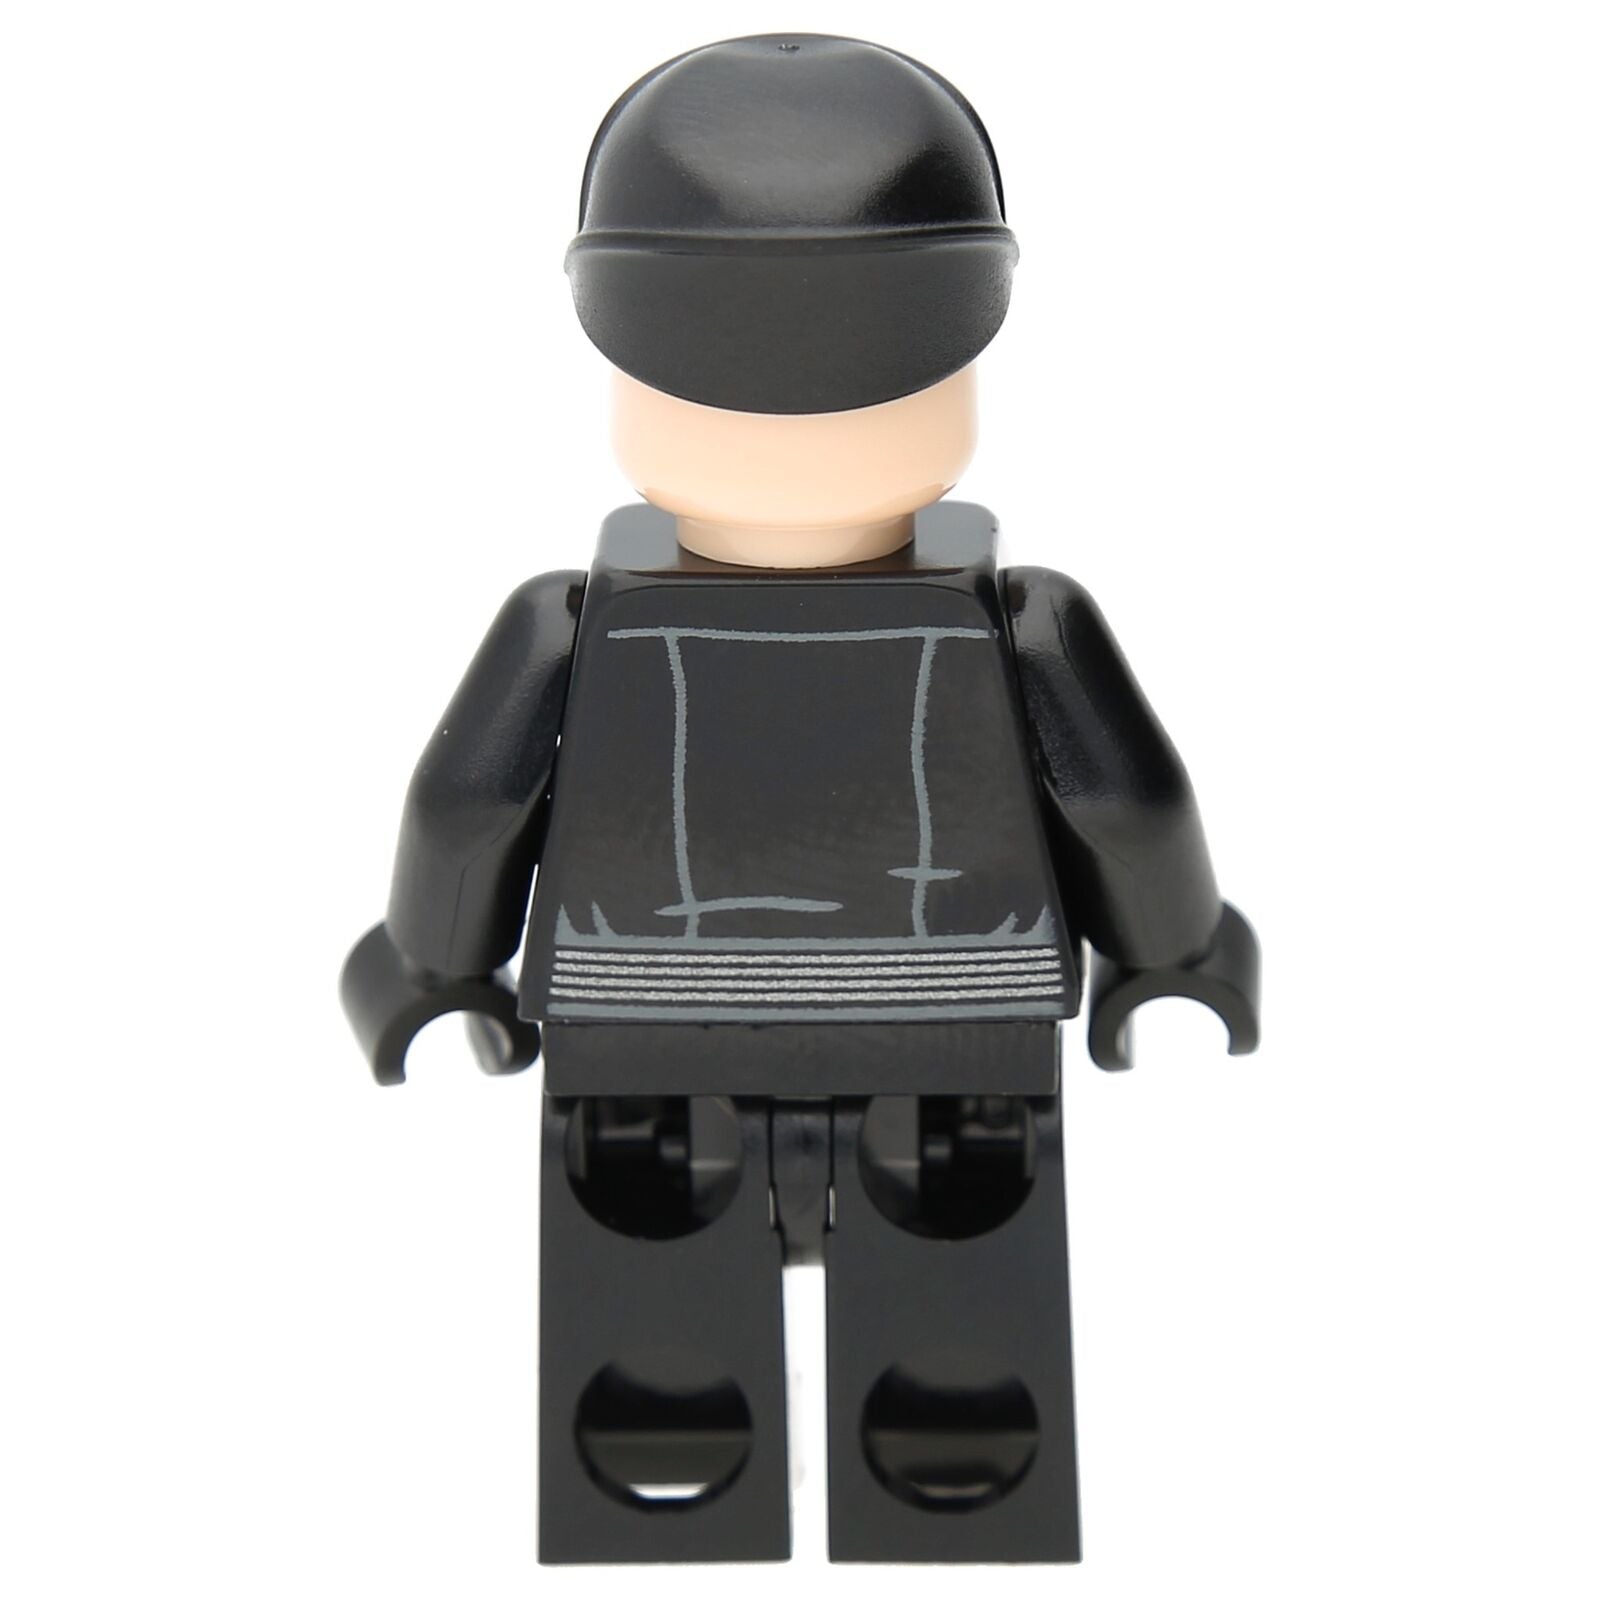 LEGO Star Wars Minifigure - Sith Commodore